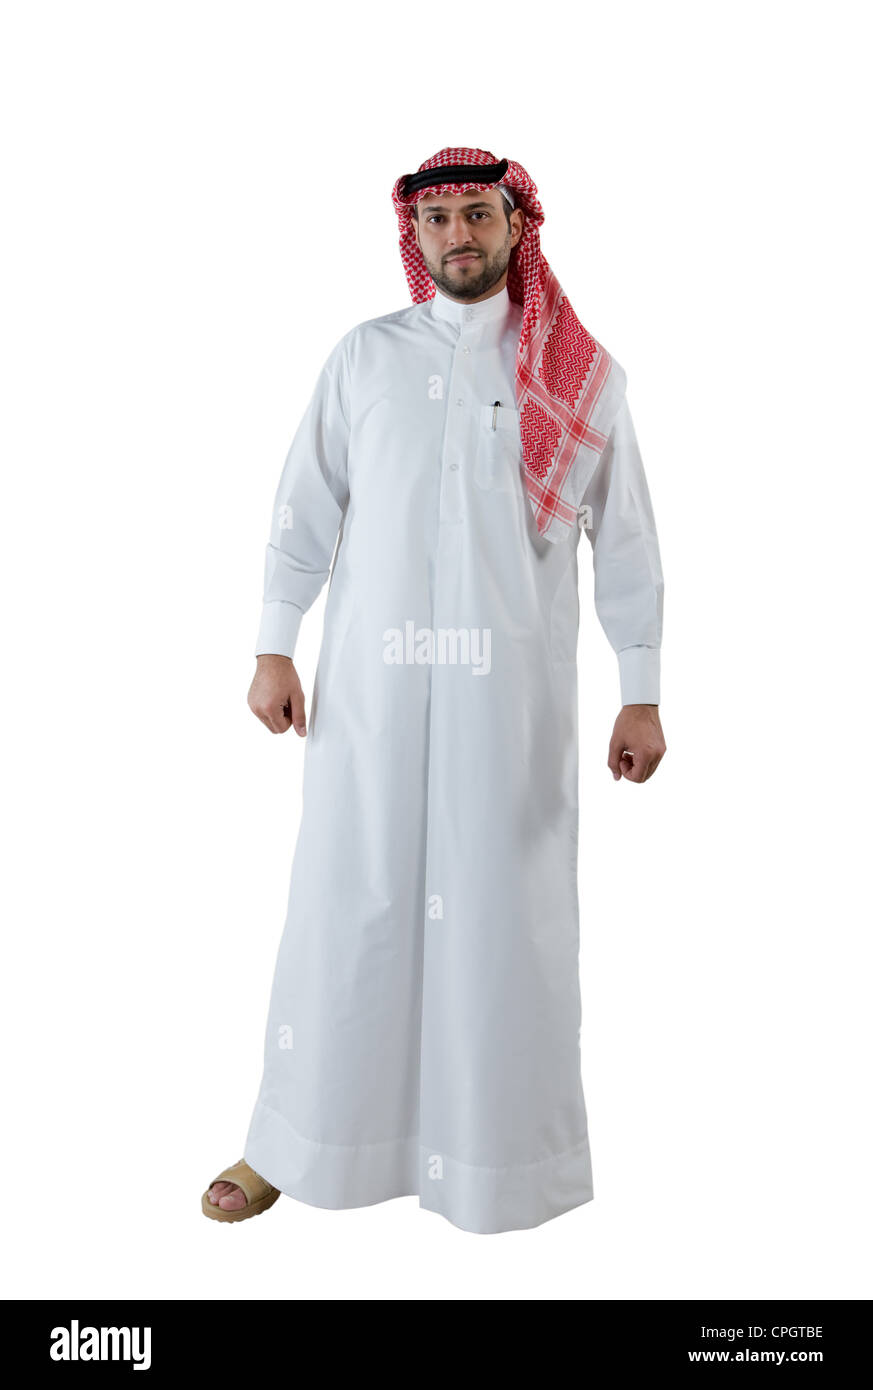 Arab man wearing a traditional dress, looking at the camera Stock Photo